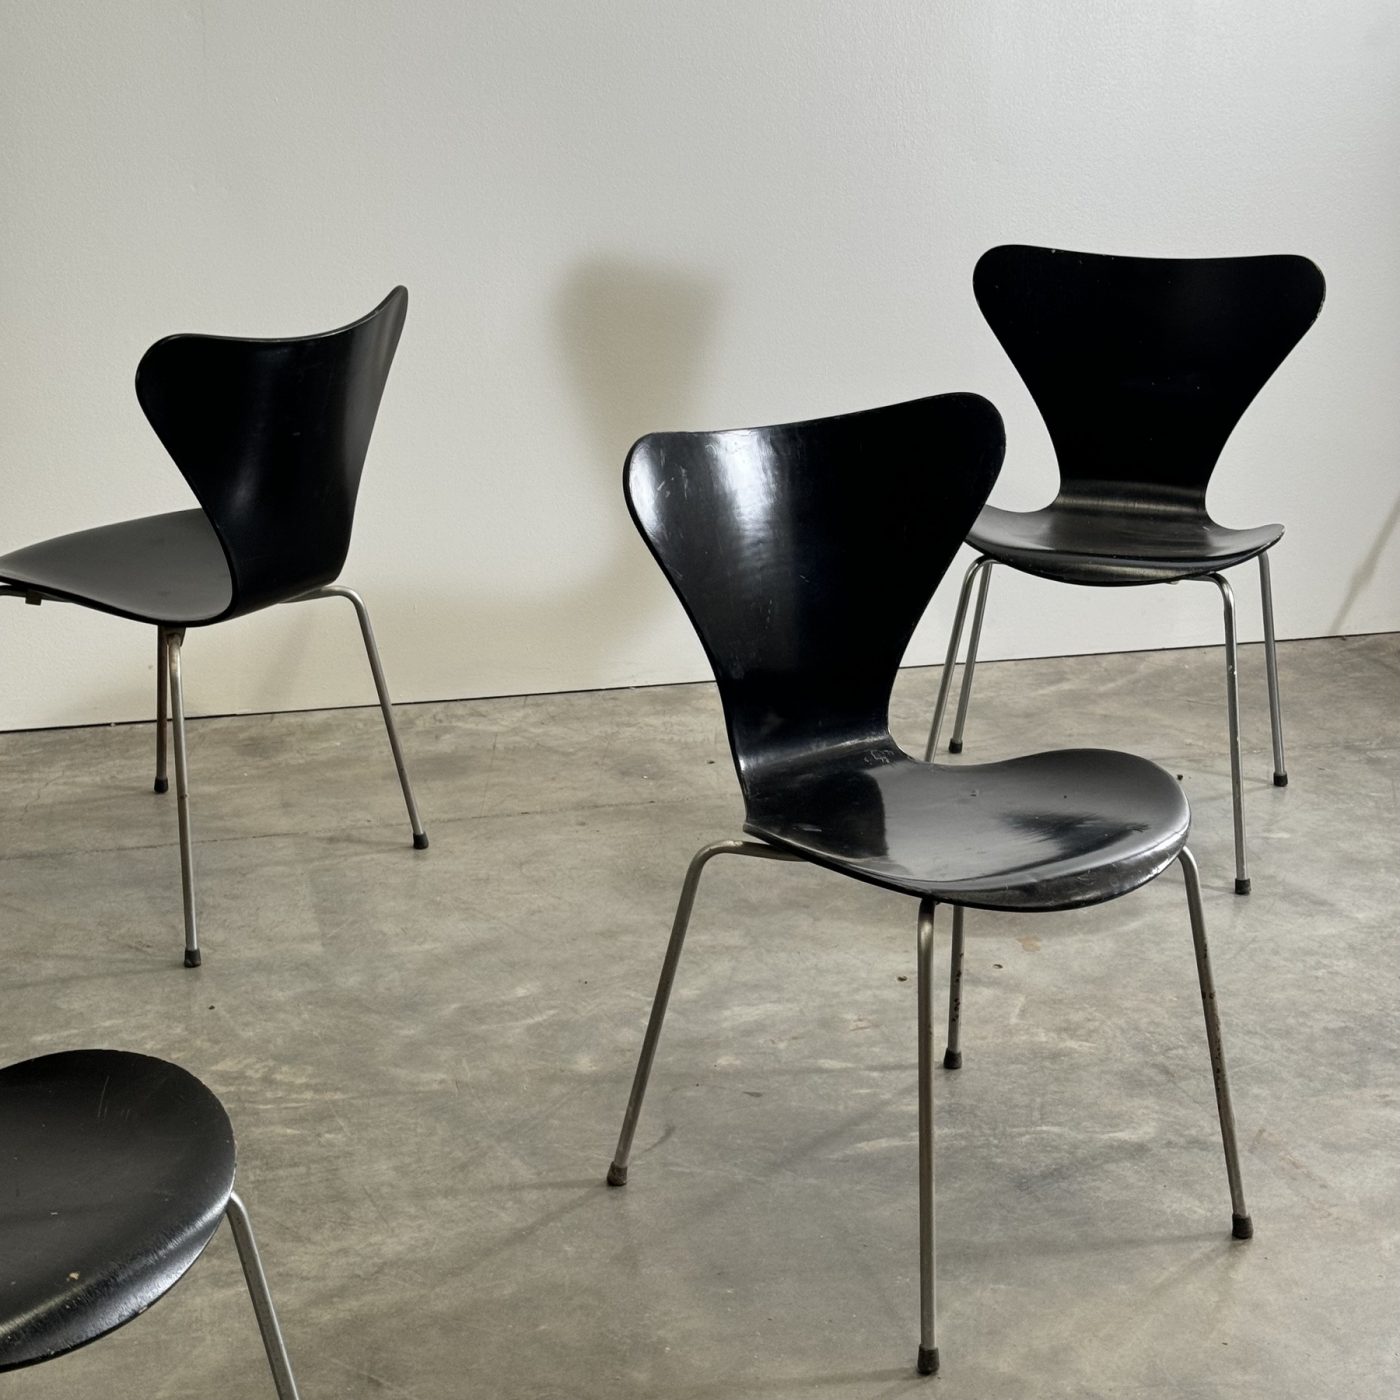 objet-vagabond-jacobsen-chairs0003